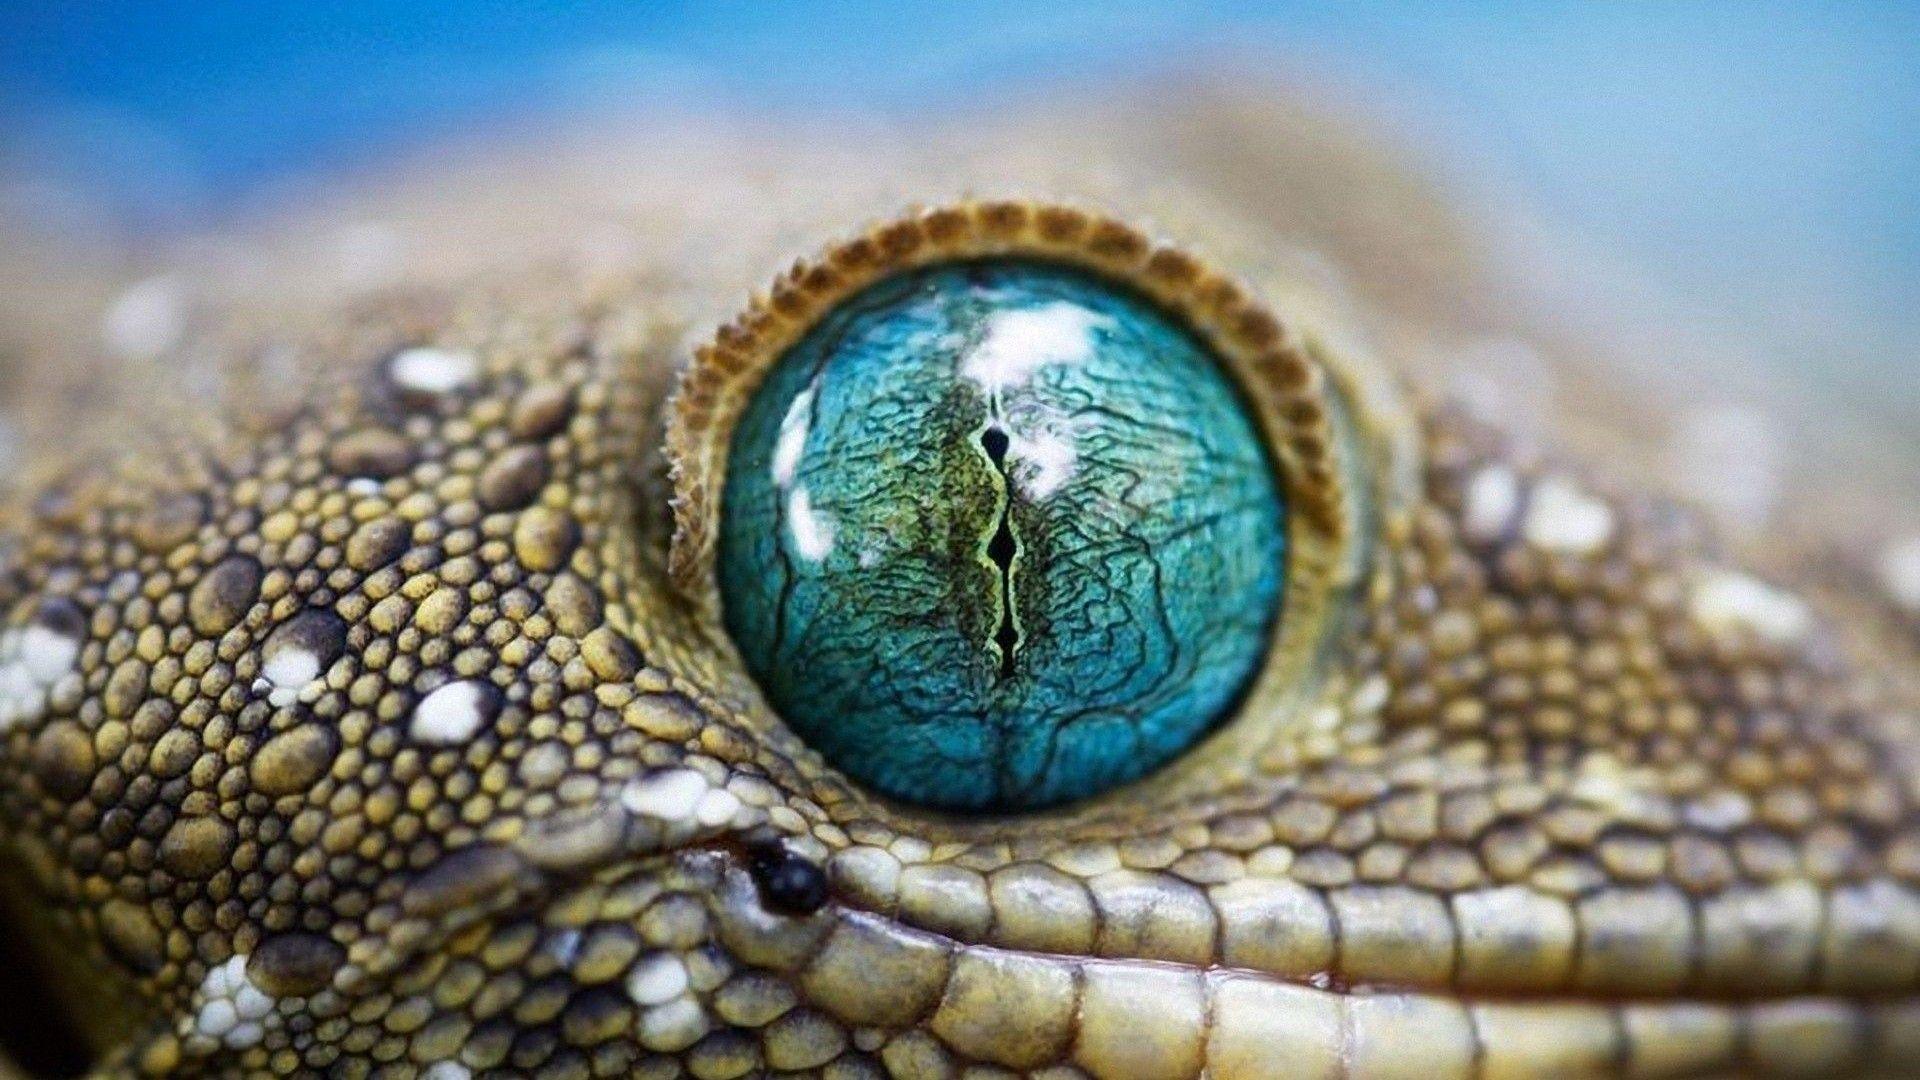 Reptile eye wallpaper